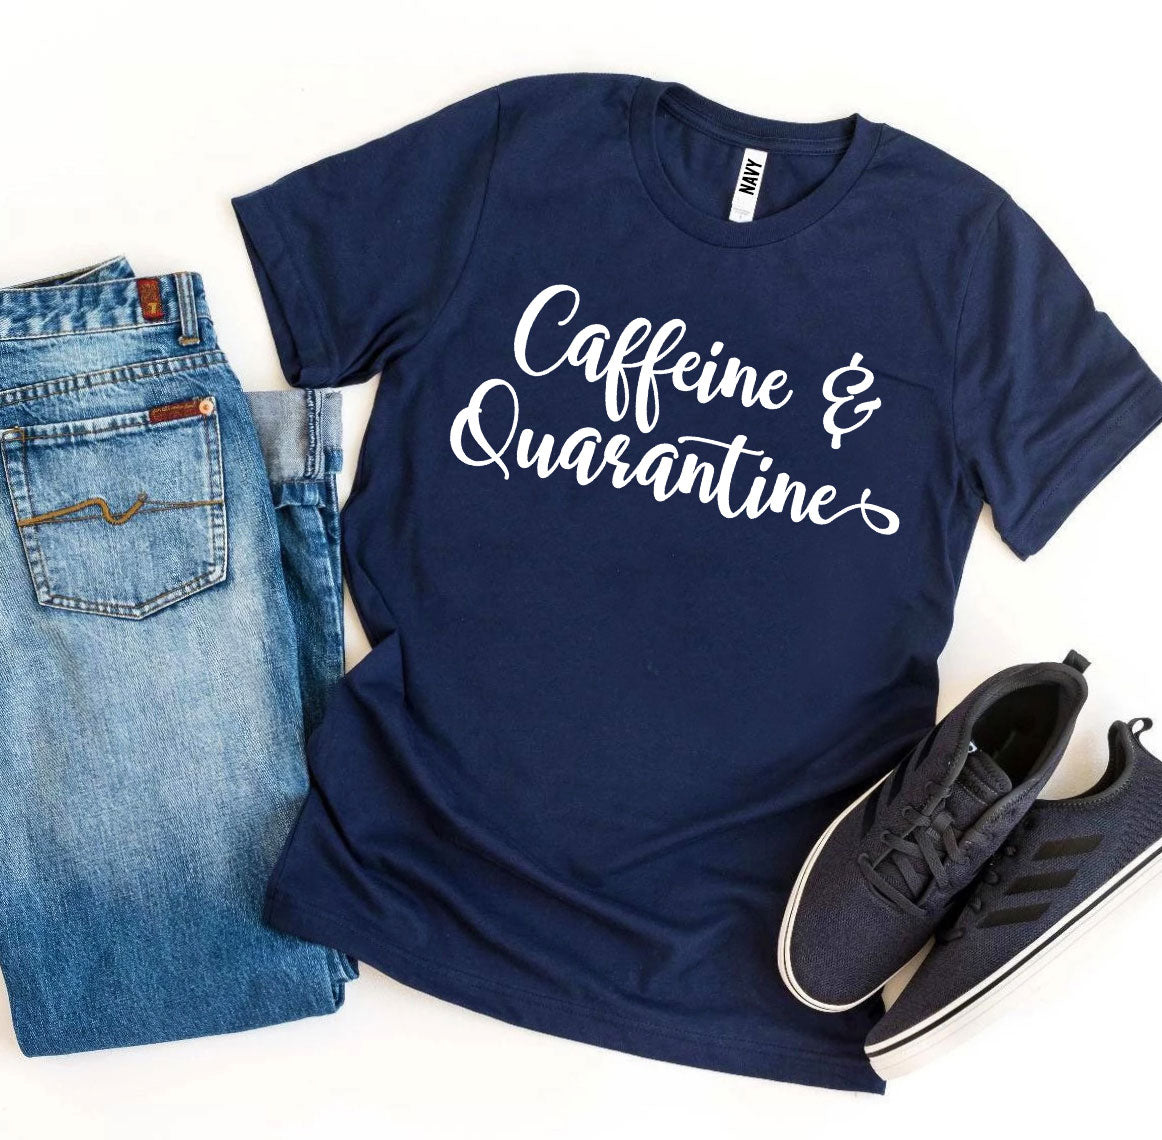 Caffeine & Quarantine T-shirt